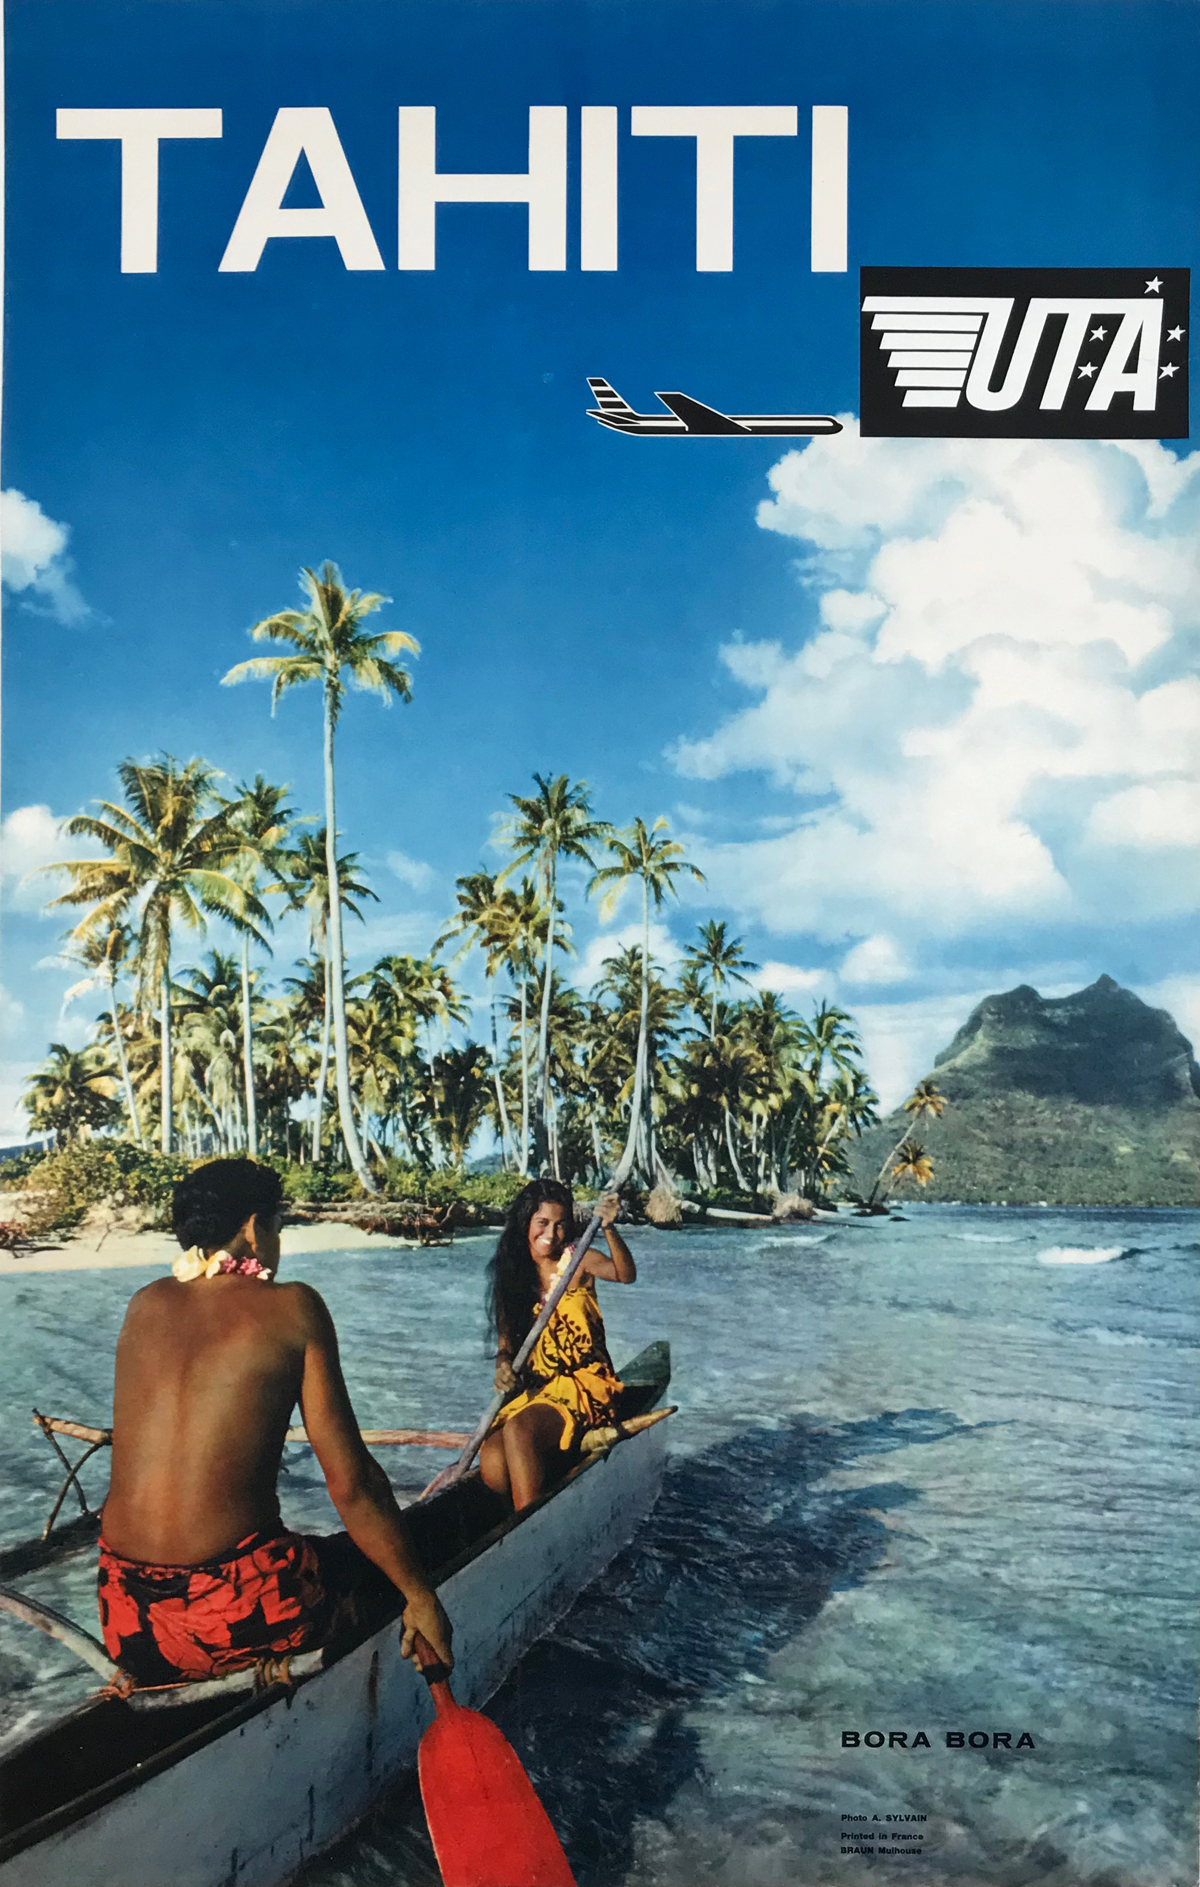 Tahiti UTA Bora Bora Photo by Sylvain Original 1963 Vintage French Printed Airline Travel Advertisement Poster Linen Backed. UNION des TRANSPORTS AERIENS Airlines to Polynesia .....